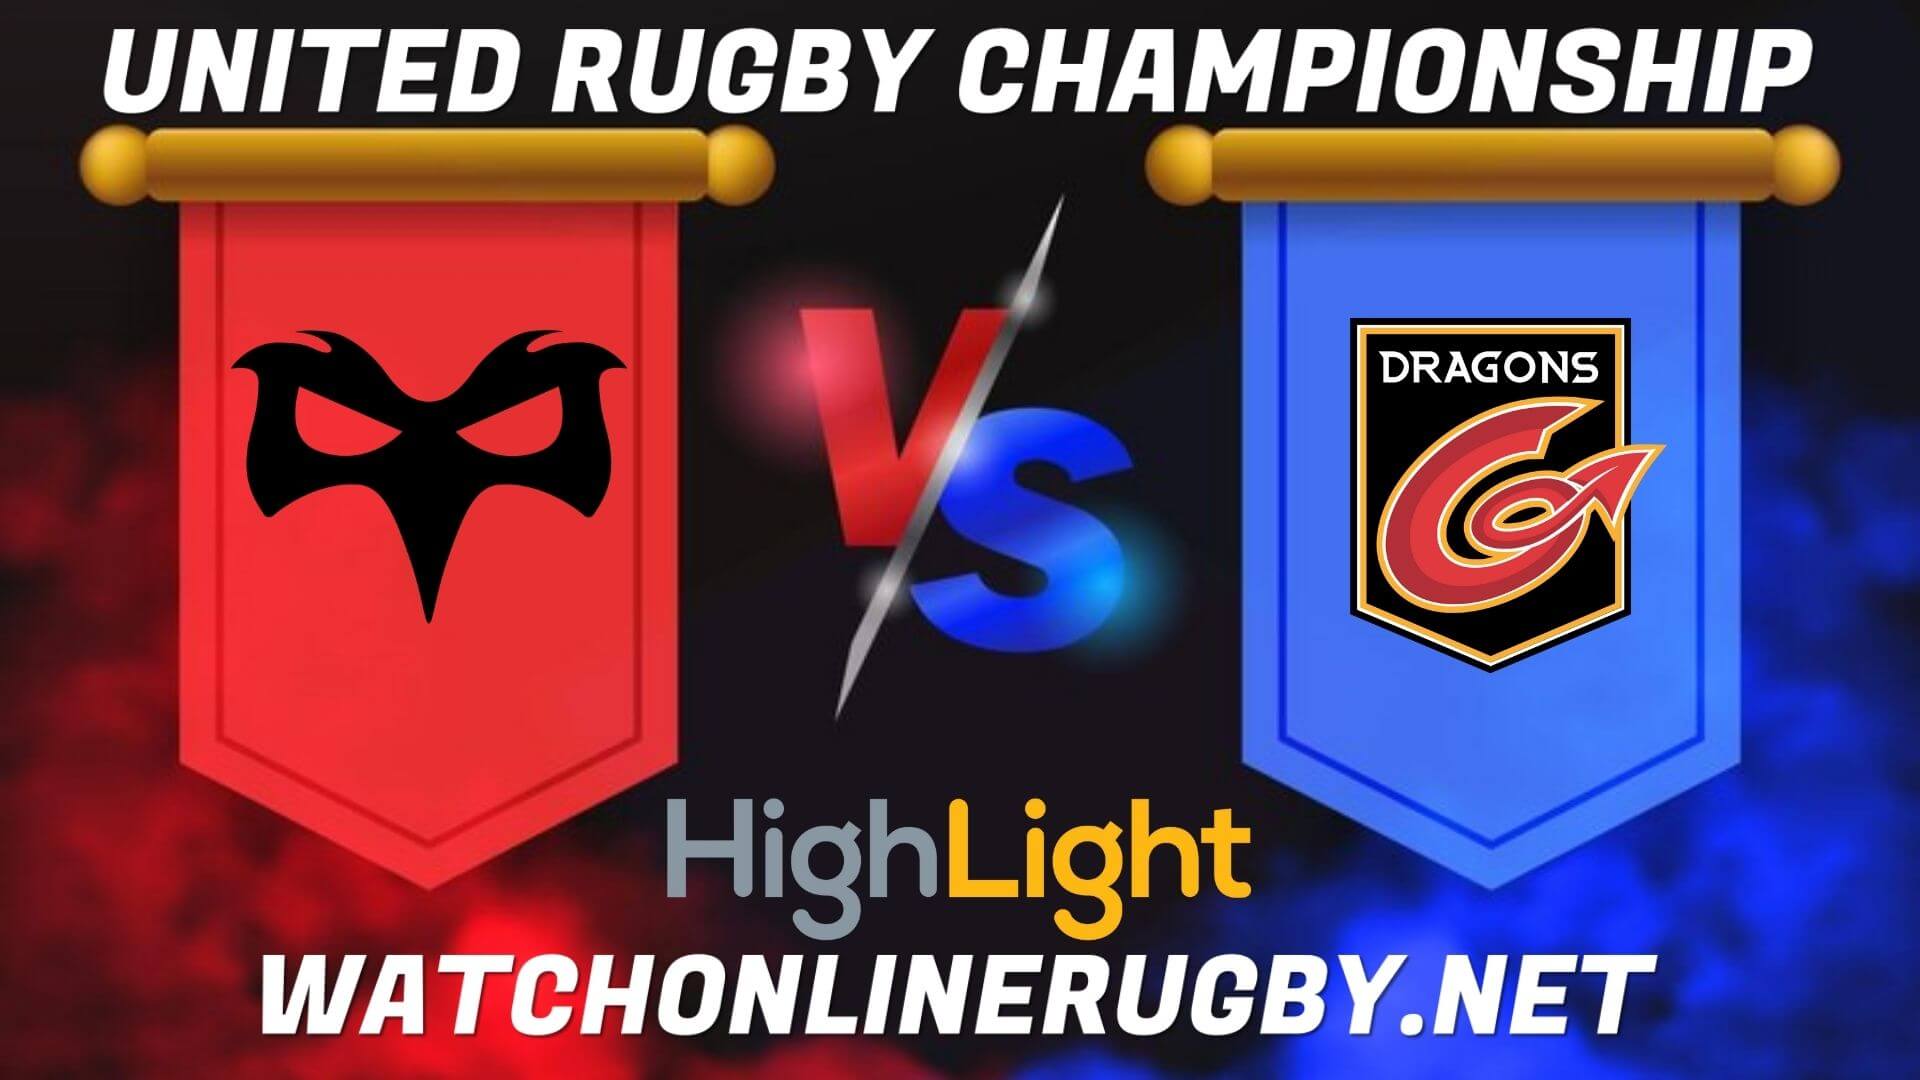 Ospreys Vs Dragons United Rugby Championship 2022 RD 8